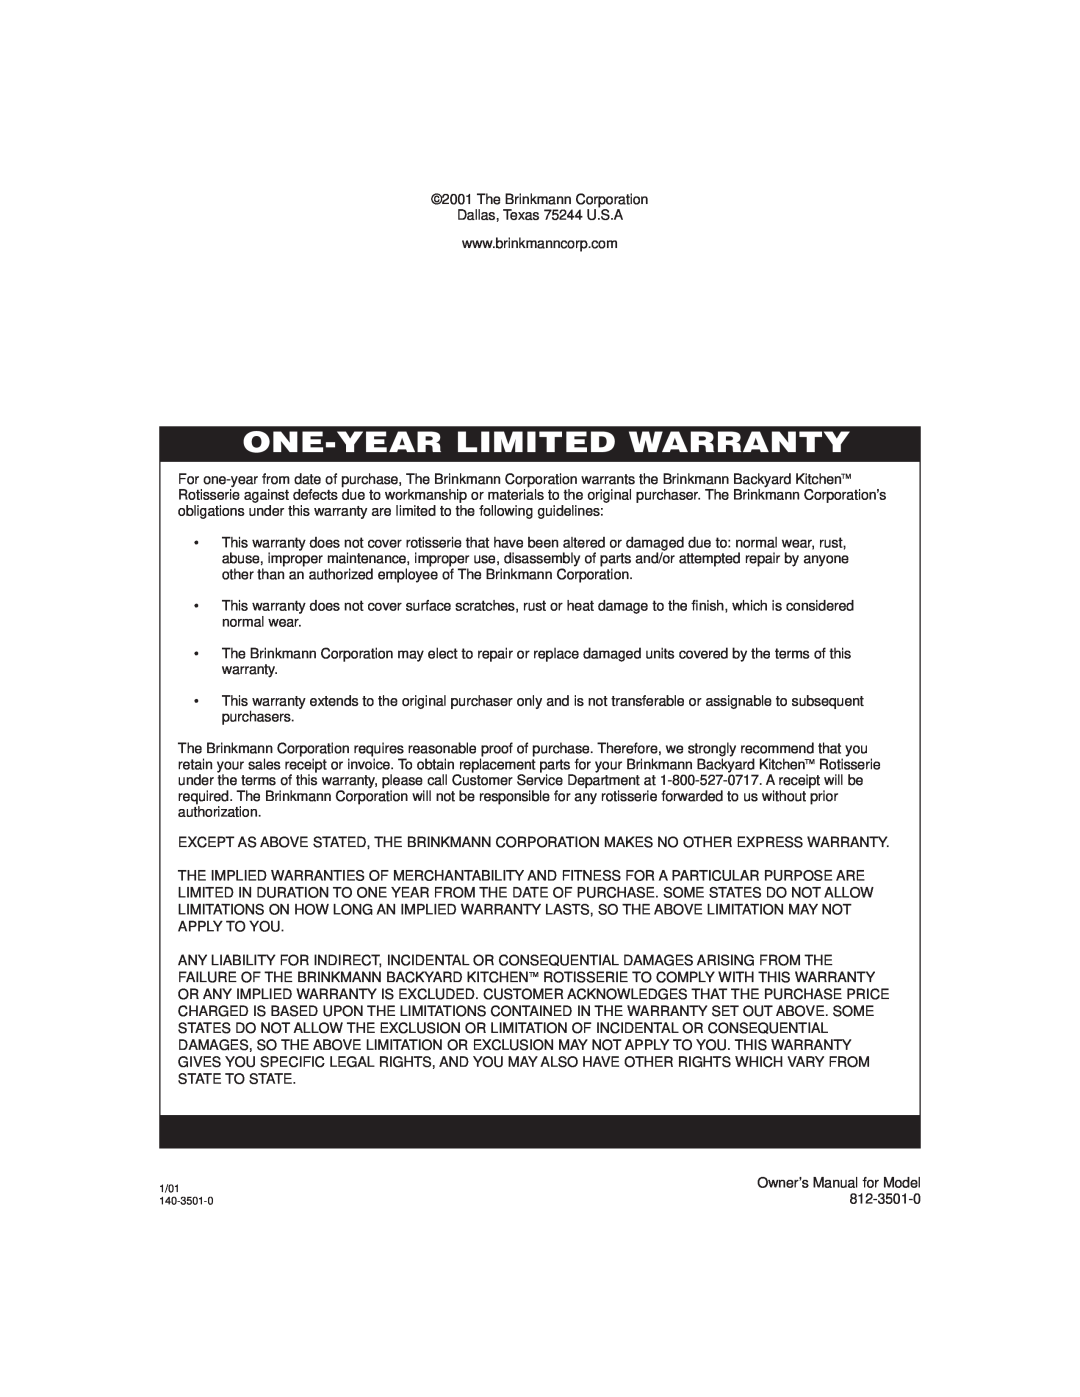 Brinkmann ROTISSERIE owner manual One-Yearlimited Warranty 